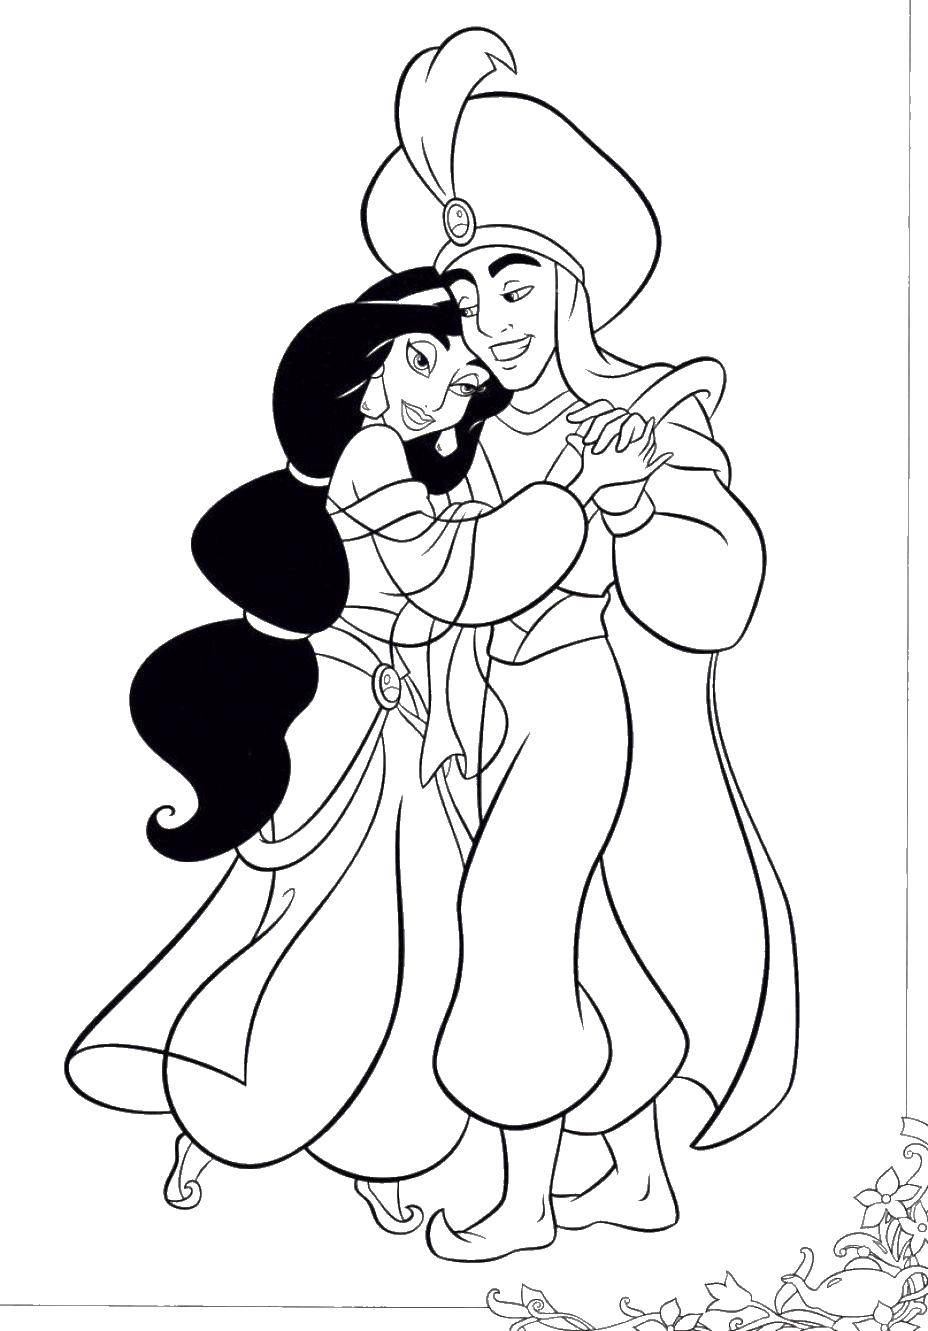 Coloring Princess Jasmine and Prince Ali. Category Disney cartoons. Tags:  Disney cartoons, Aladdin, Jasmine.